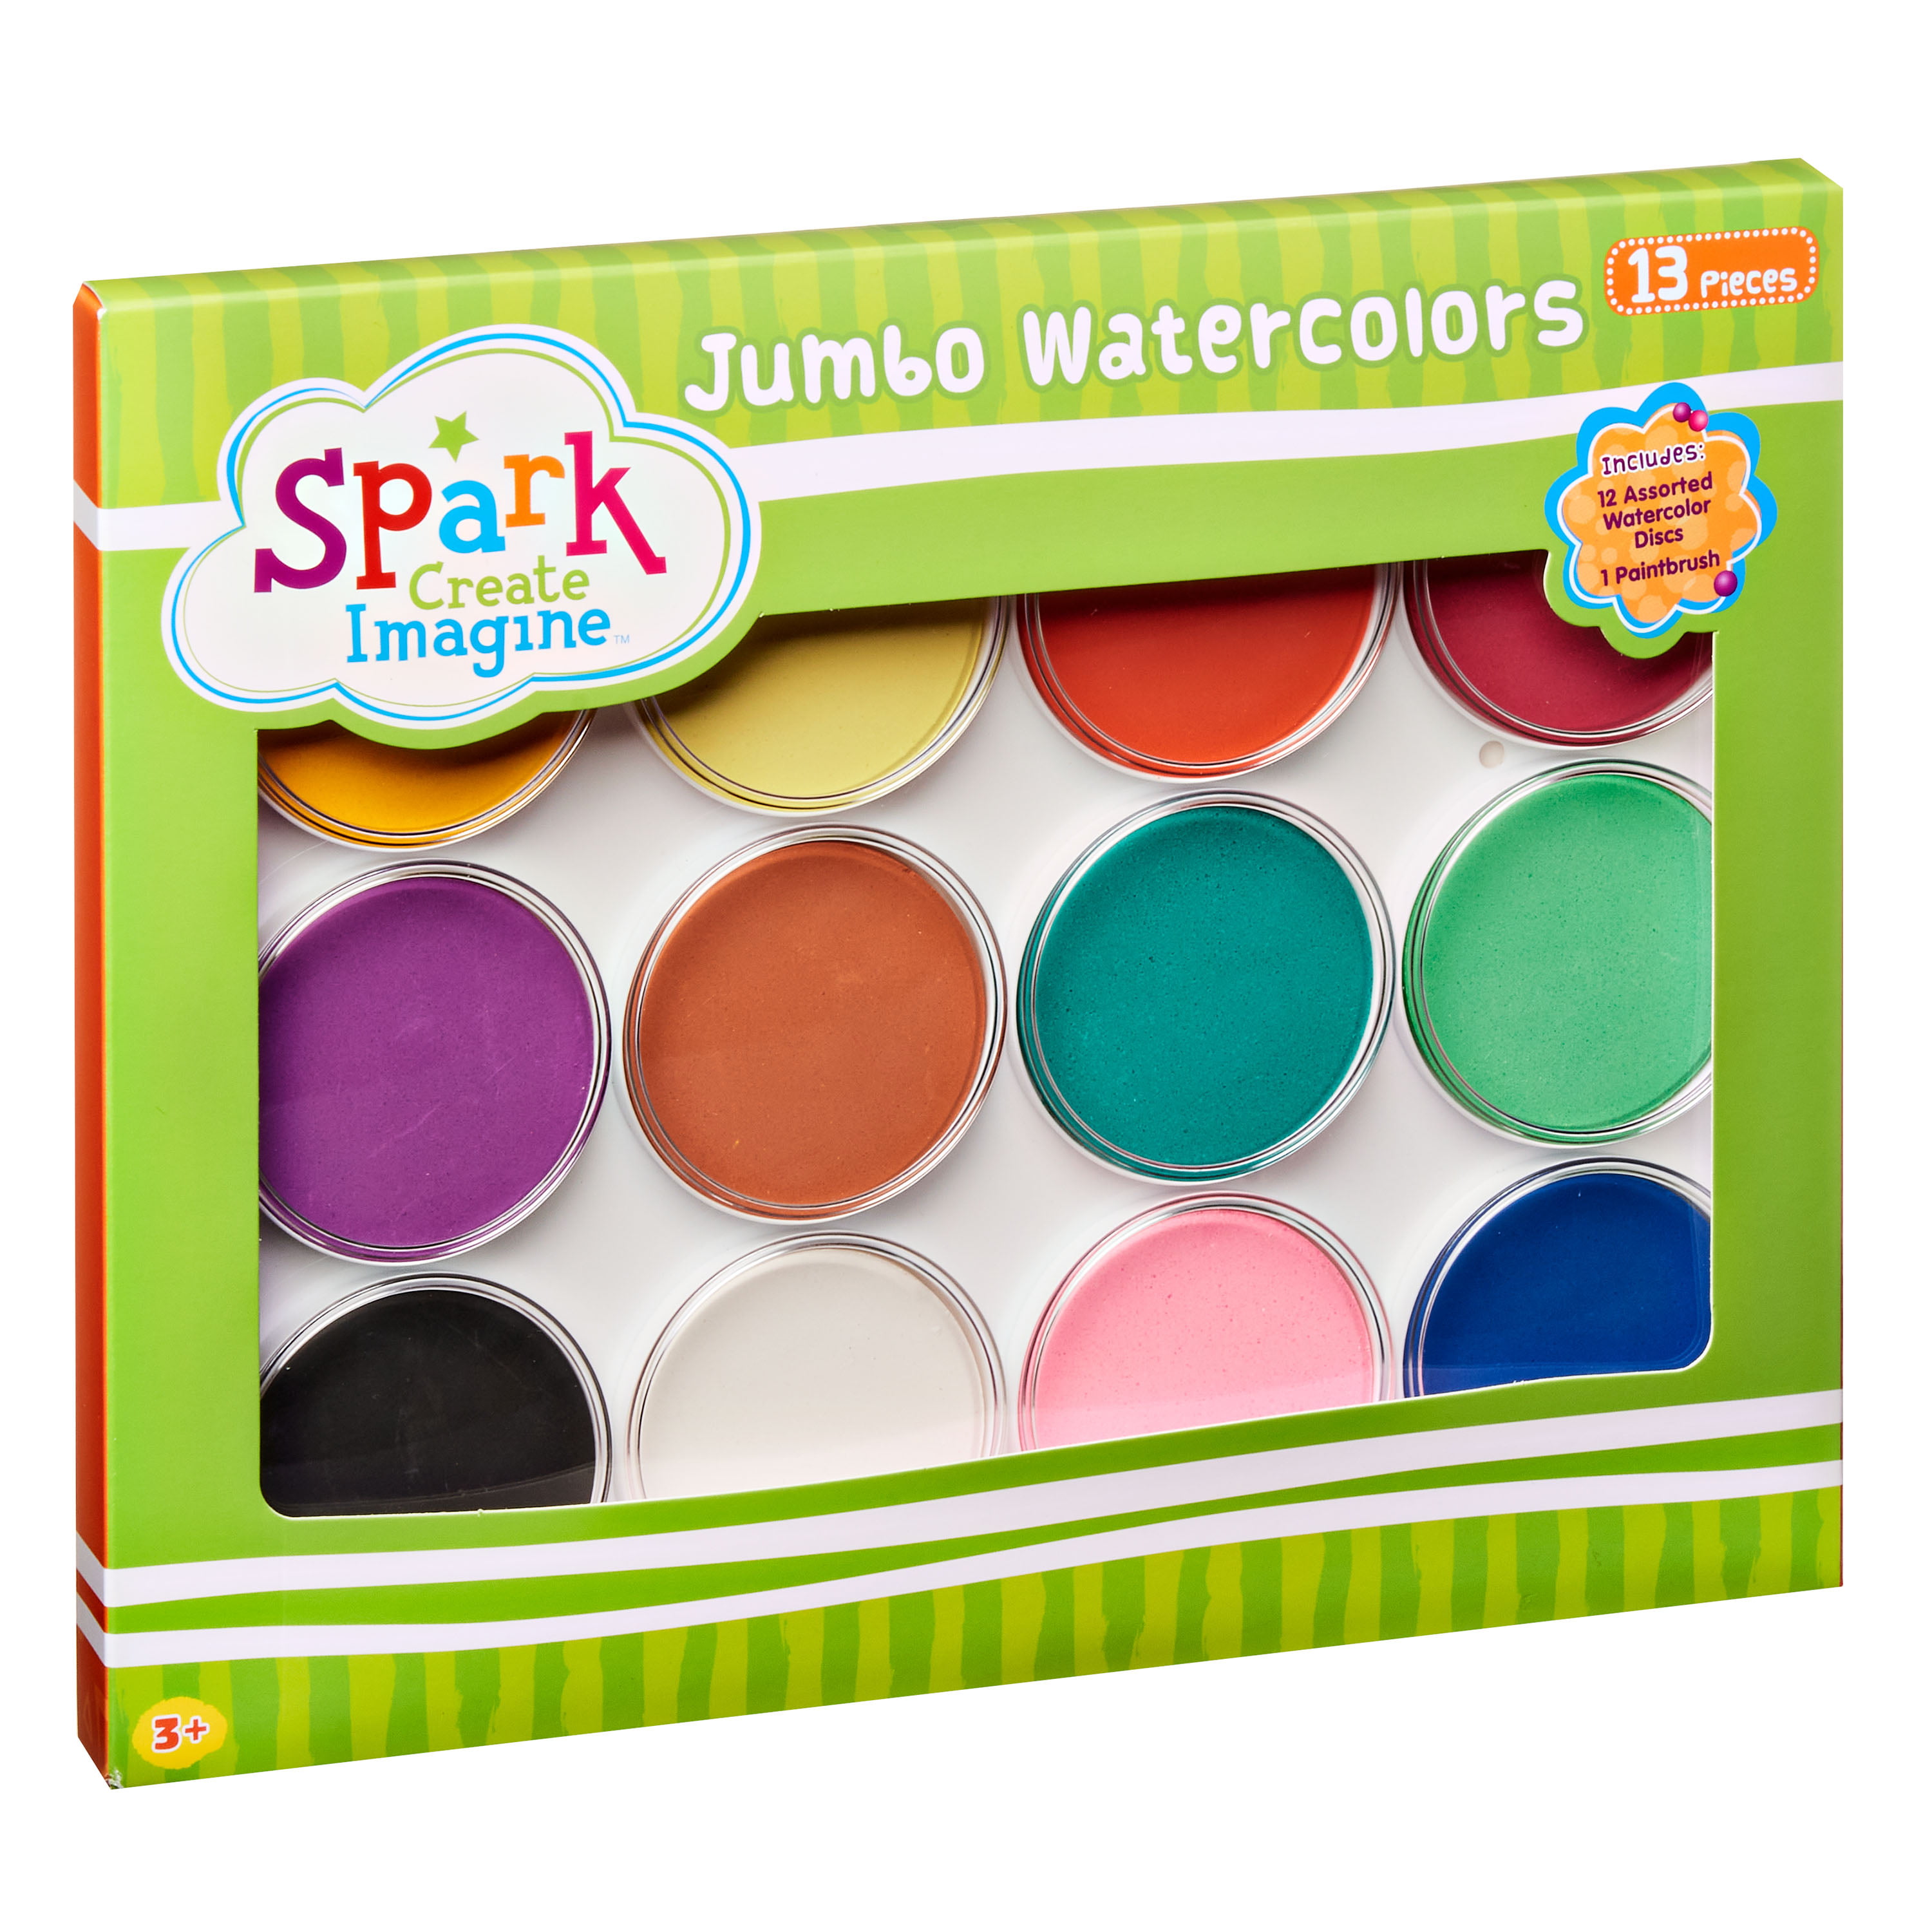 Spark Create Imagine Jumbo Watercolor Paint Set. 12 Assorted Colors,  Includes Paint Brush. 3+ 